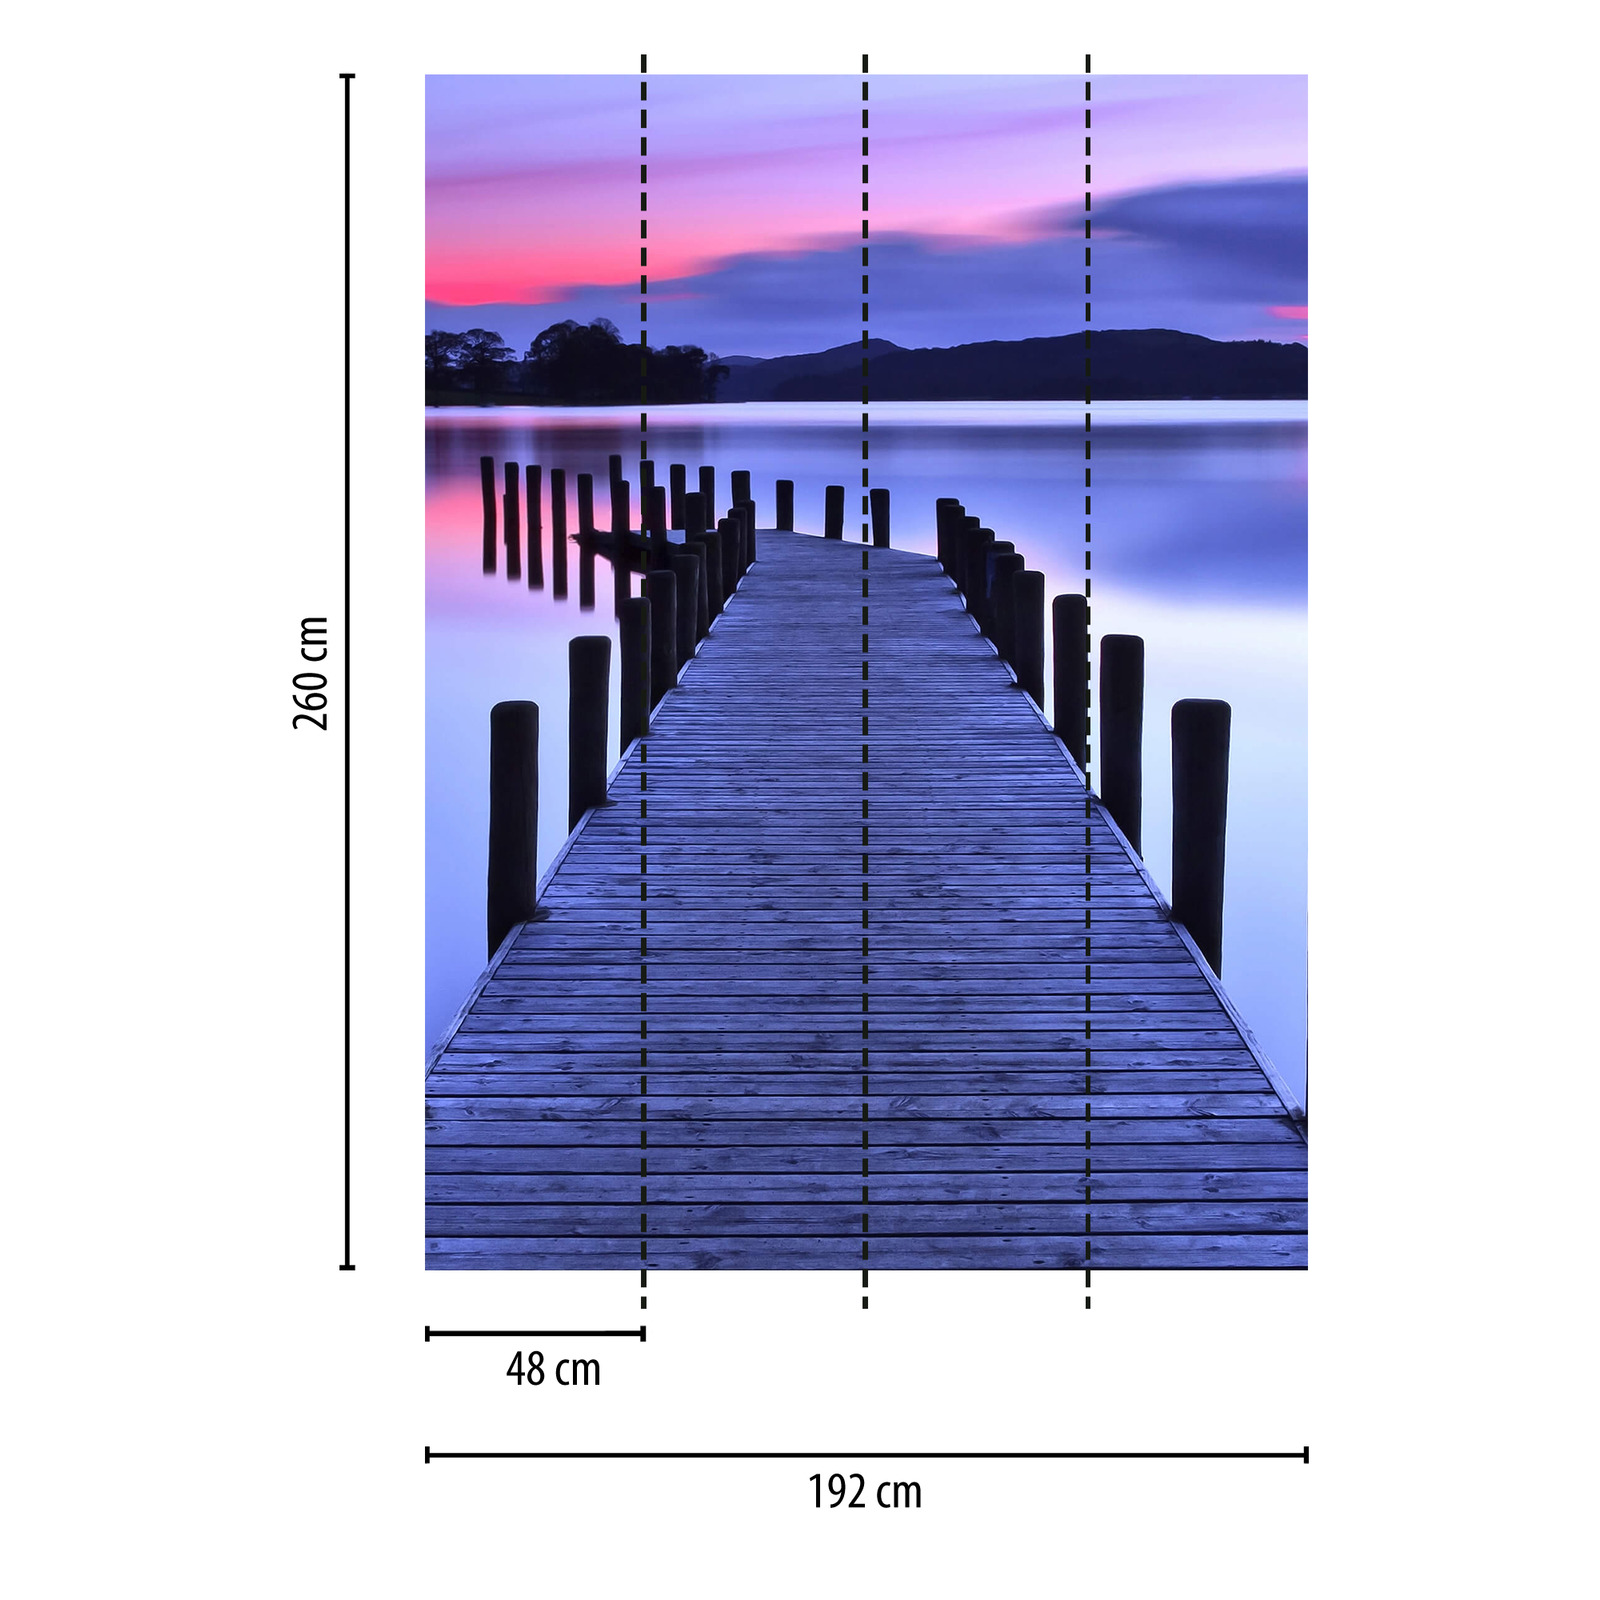             narrow photo wallpaper with bridge on the lake - purple, pink
        